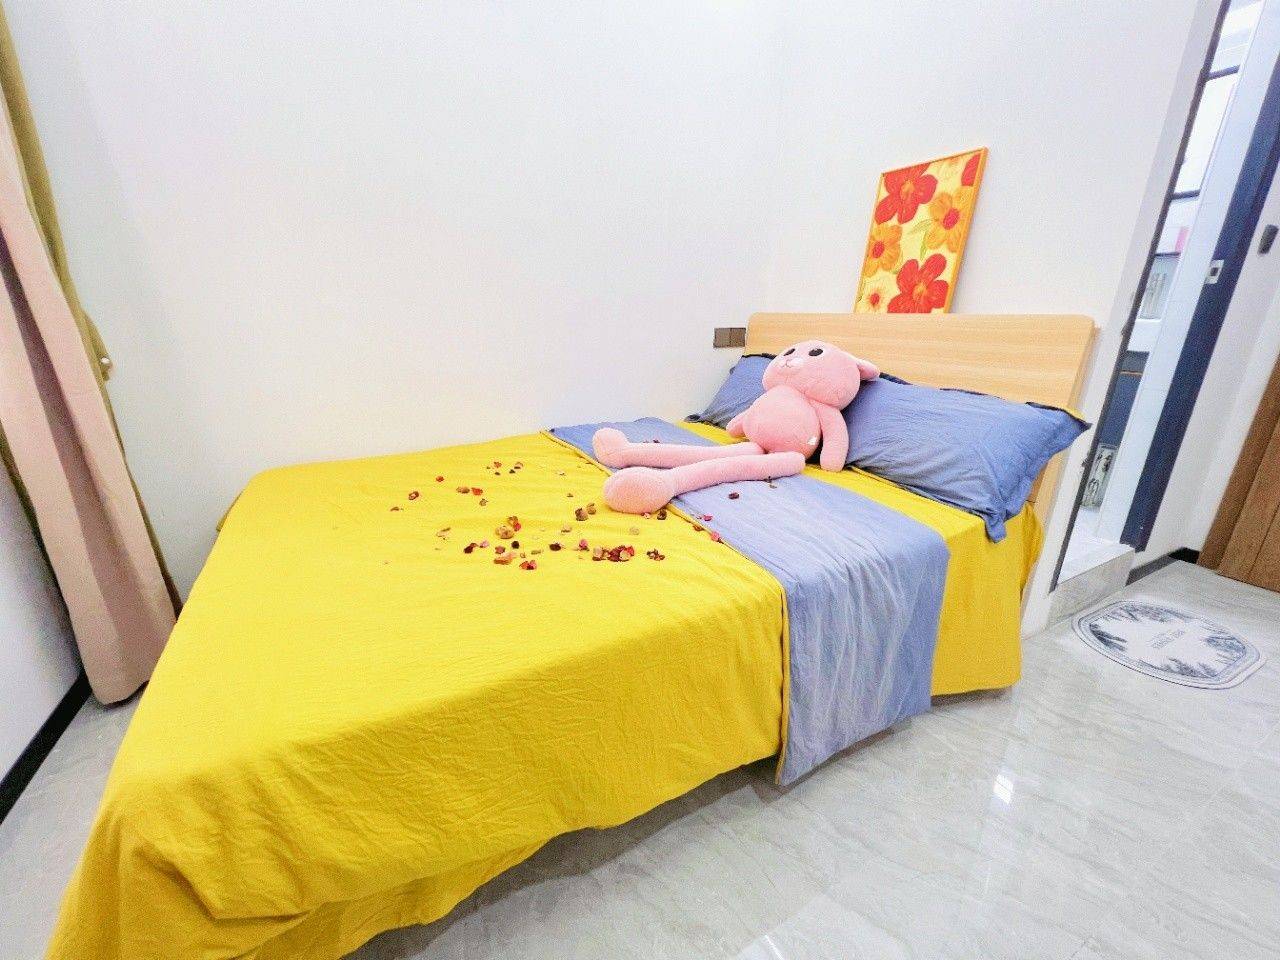 Shenzhen-Nanshan-Cozy Home,No Gender Limit